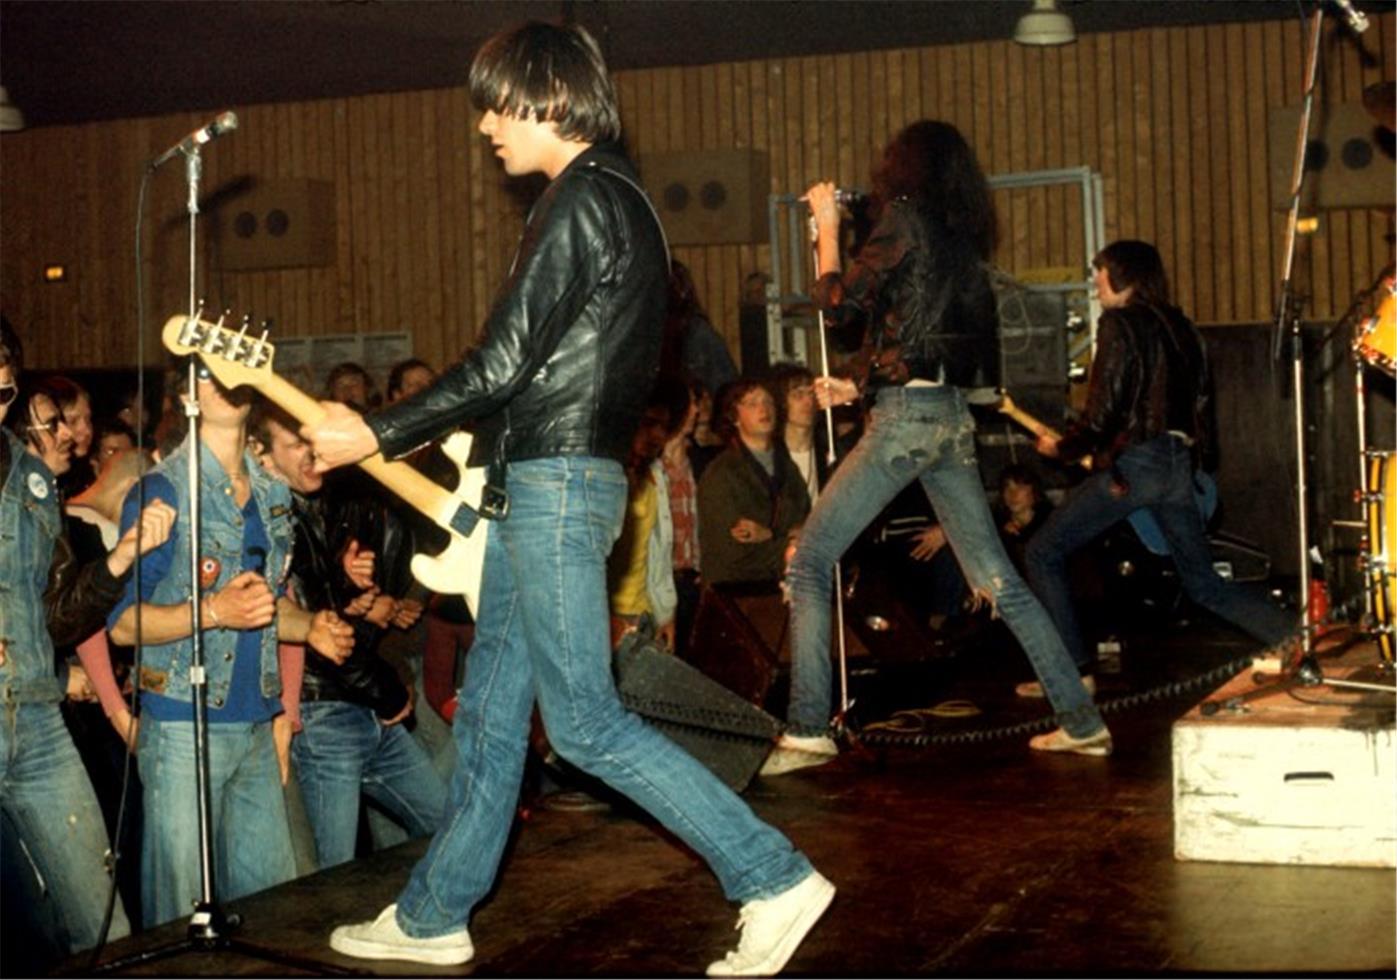 Barry Schultz Color Photograph - The Ramones, Holland, 1977